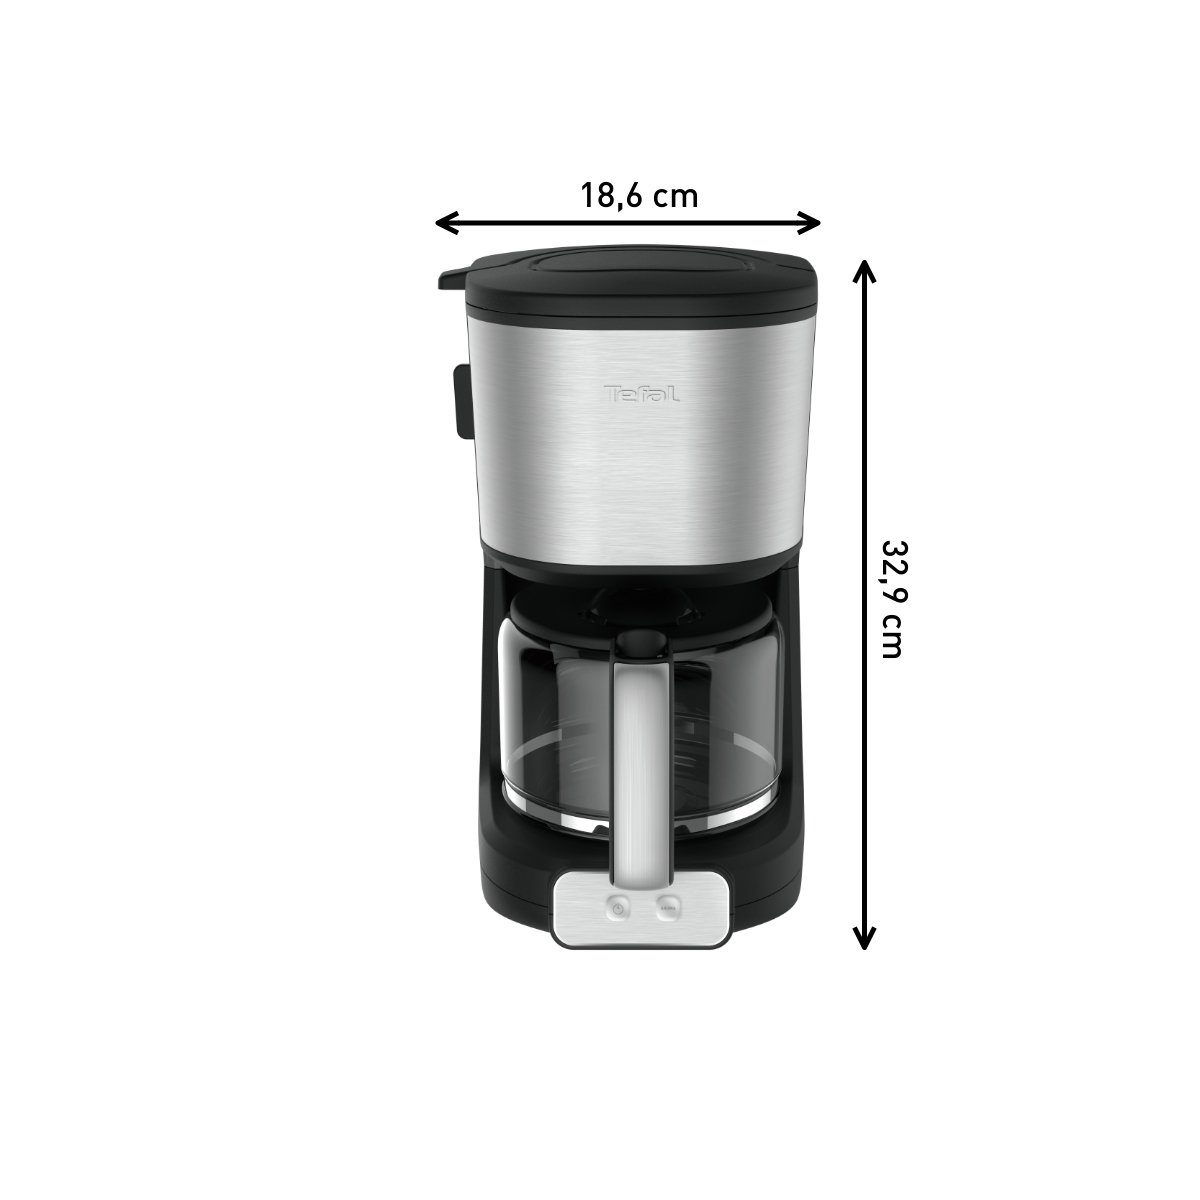 Tefal Filterkaffeemaschine Element, 1.25l Kaffeekanne